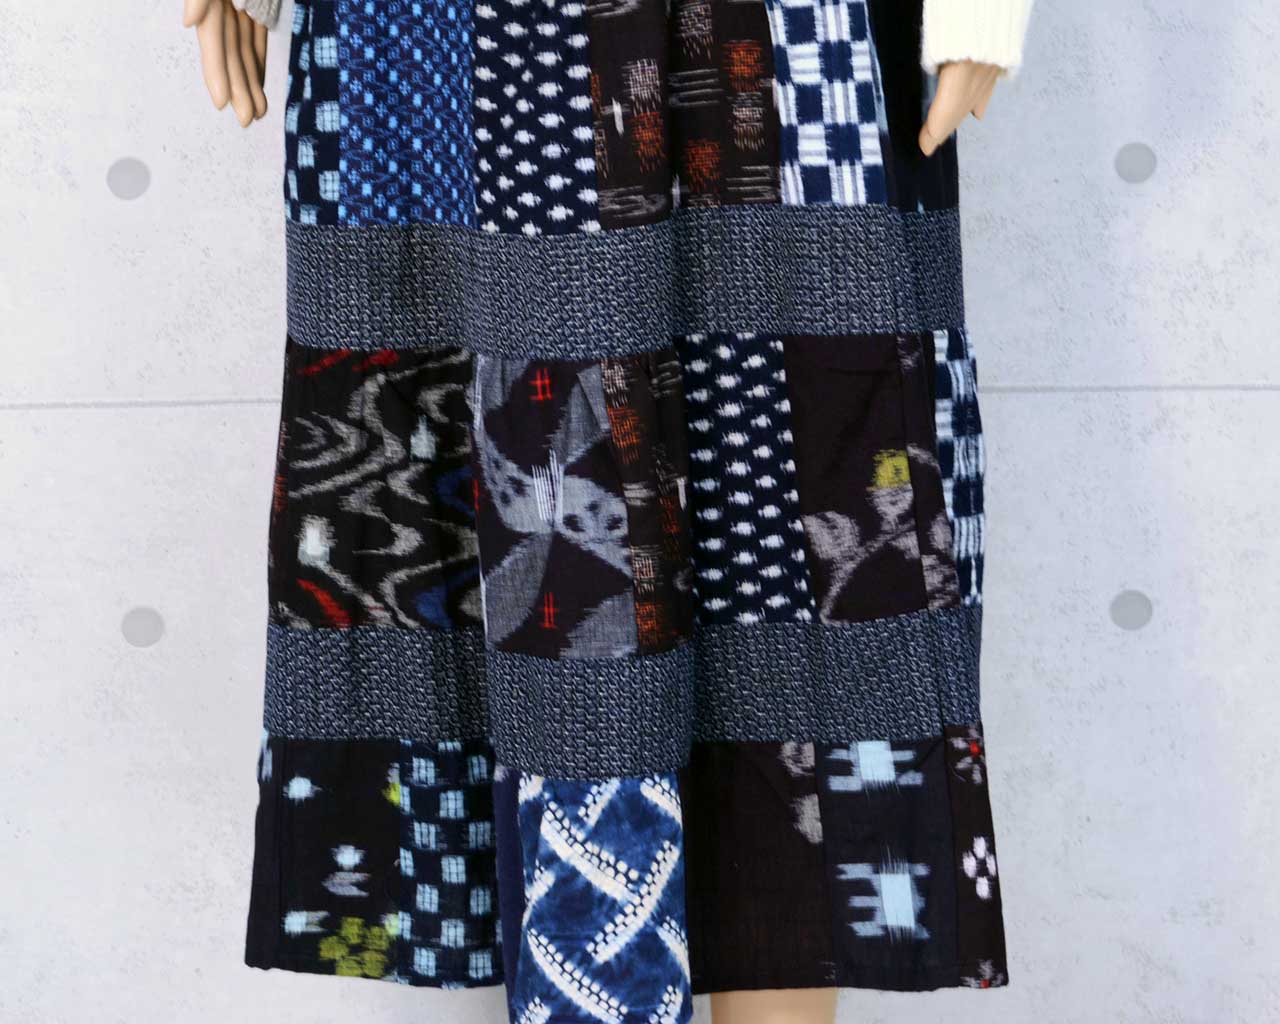 Tiered skirt with indigo-dyed Kurume Kasuri pattern